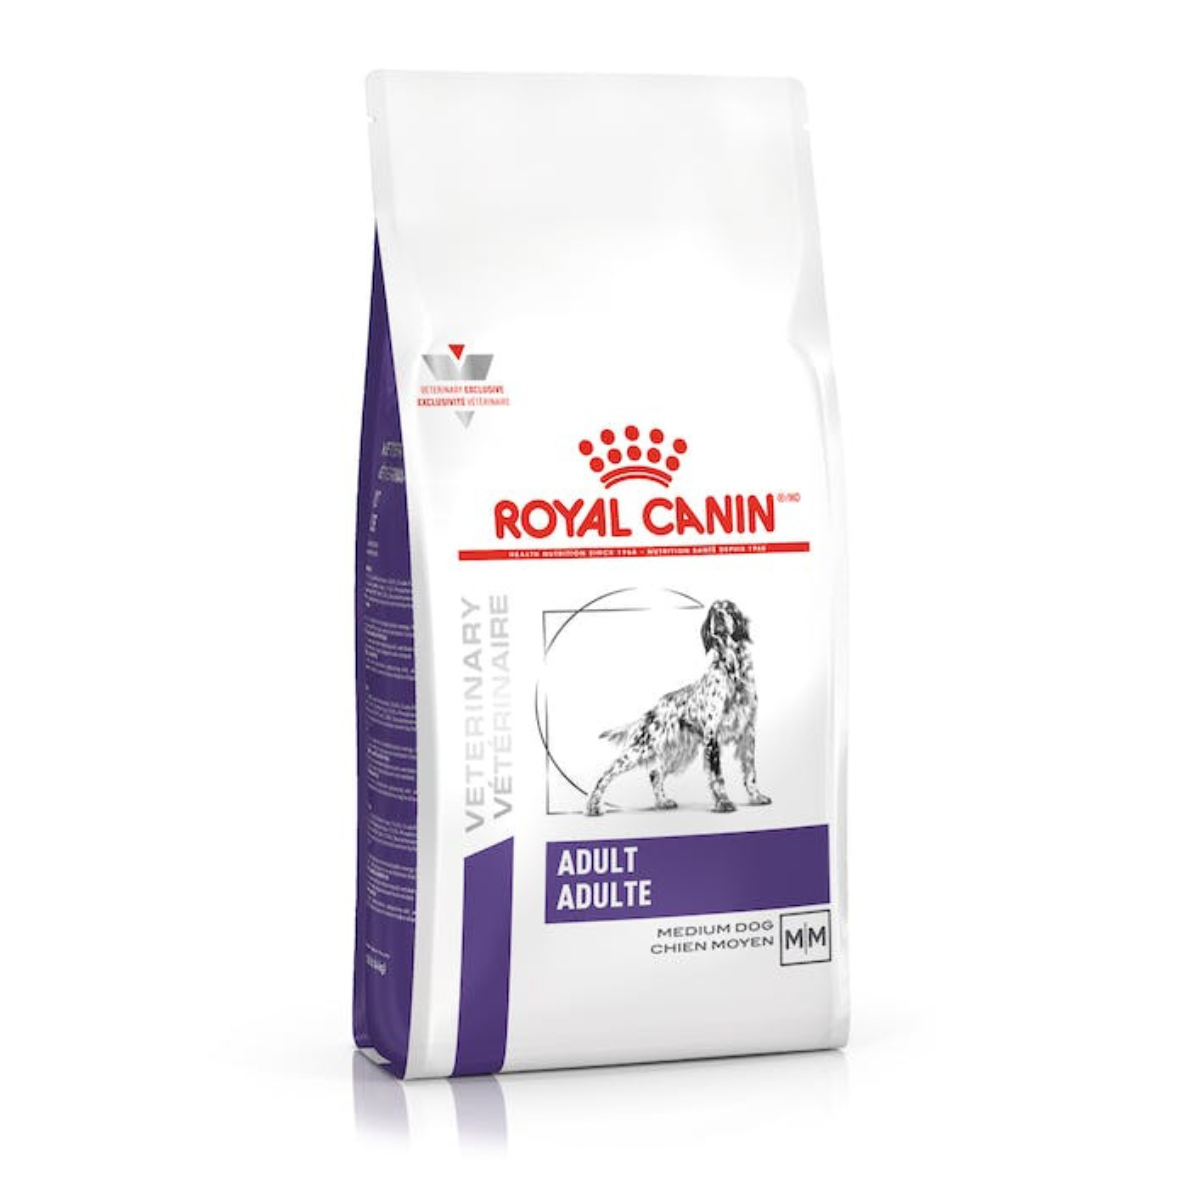 Royal Canin Alimento Canine Adult 15kg